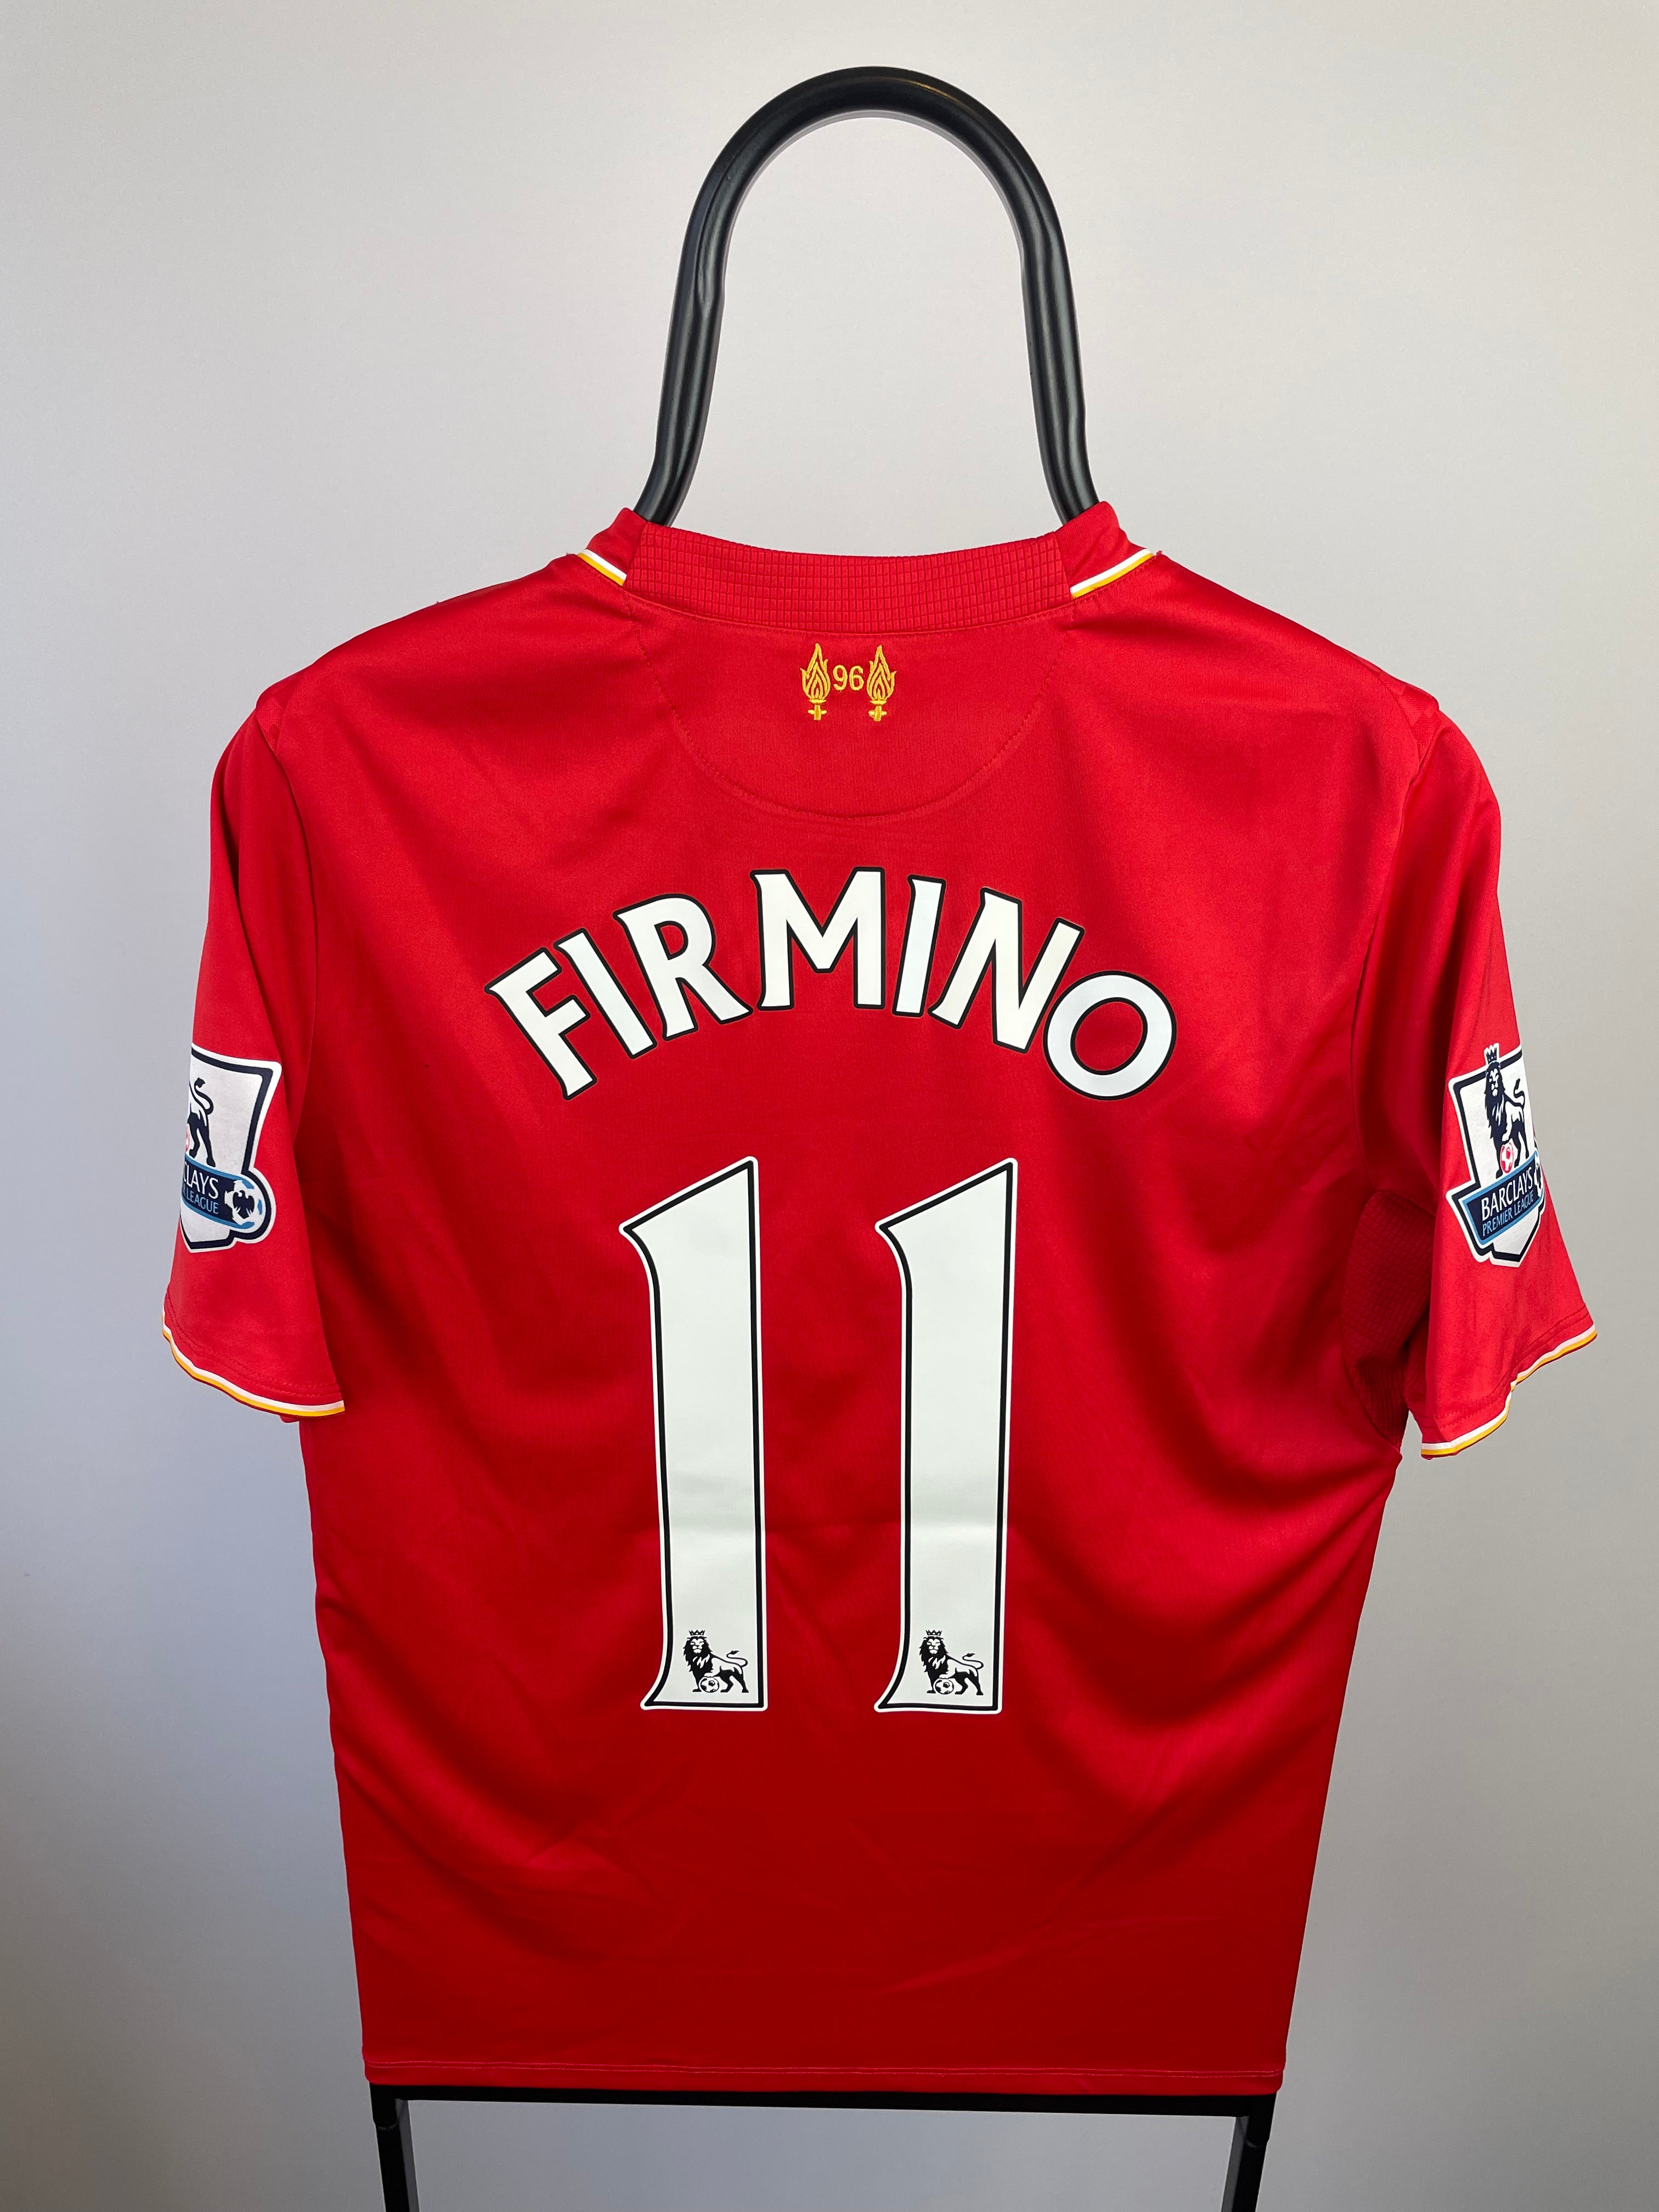 Roberto Firmino Liverpool 15/16 hjemmebanetrøje - S